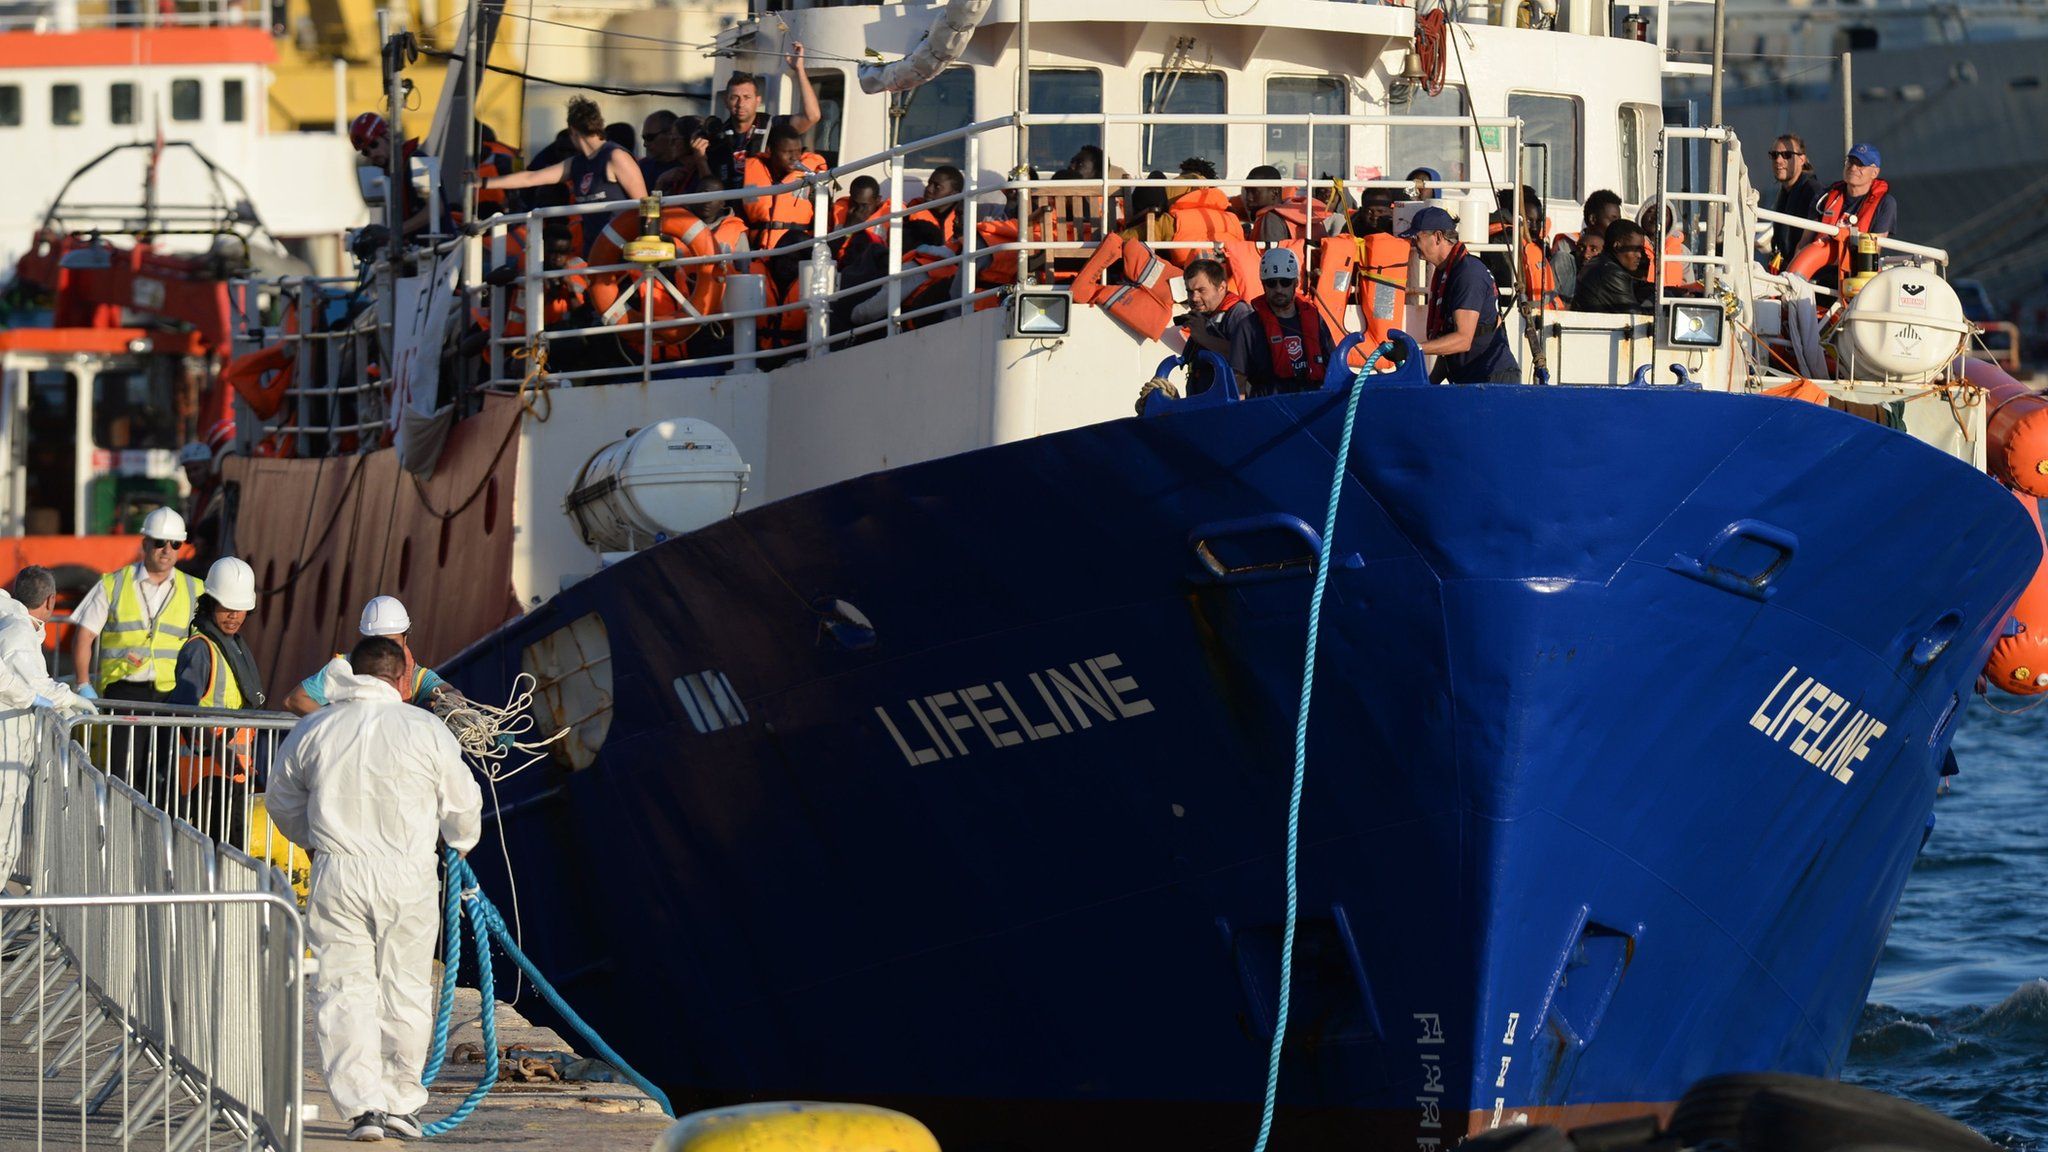 Charity ship Lifeline docks in Malta on 27 June 2018